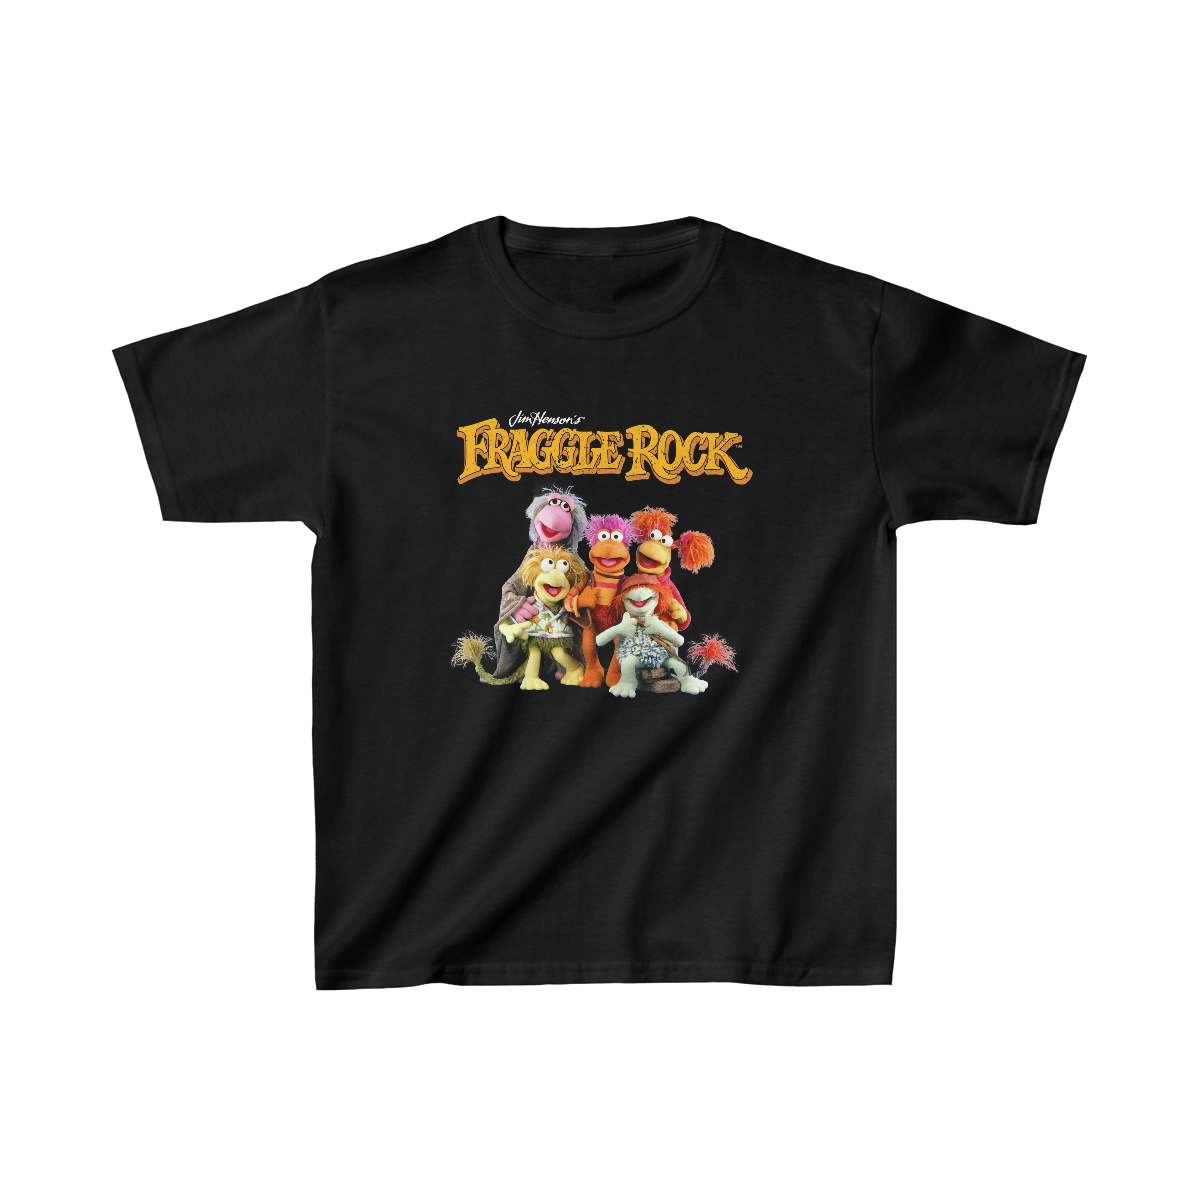 Fraggle Rock Vintage Photo Shirt Jim Henson’s Puppet Characters 80s TV Unisex Kids Heavy Cotton Tee